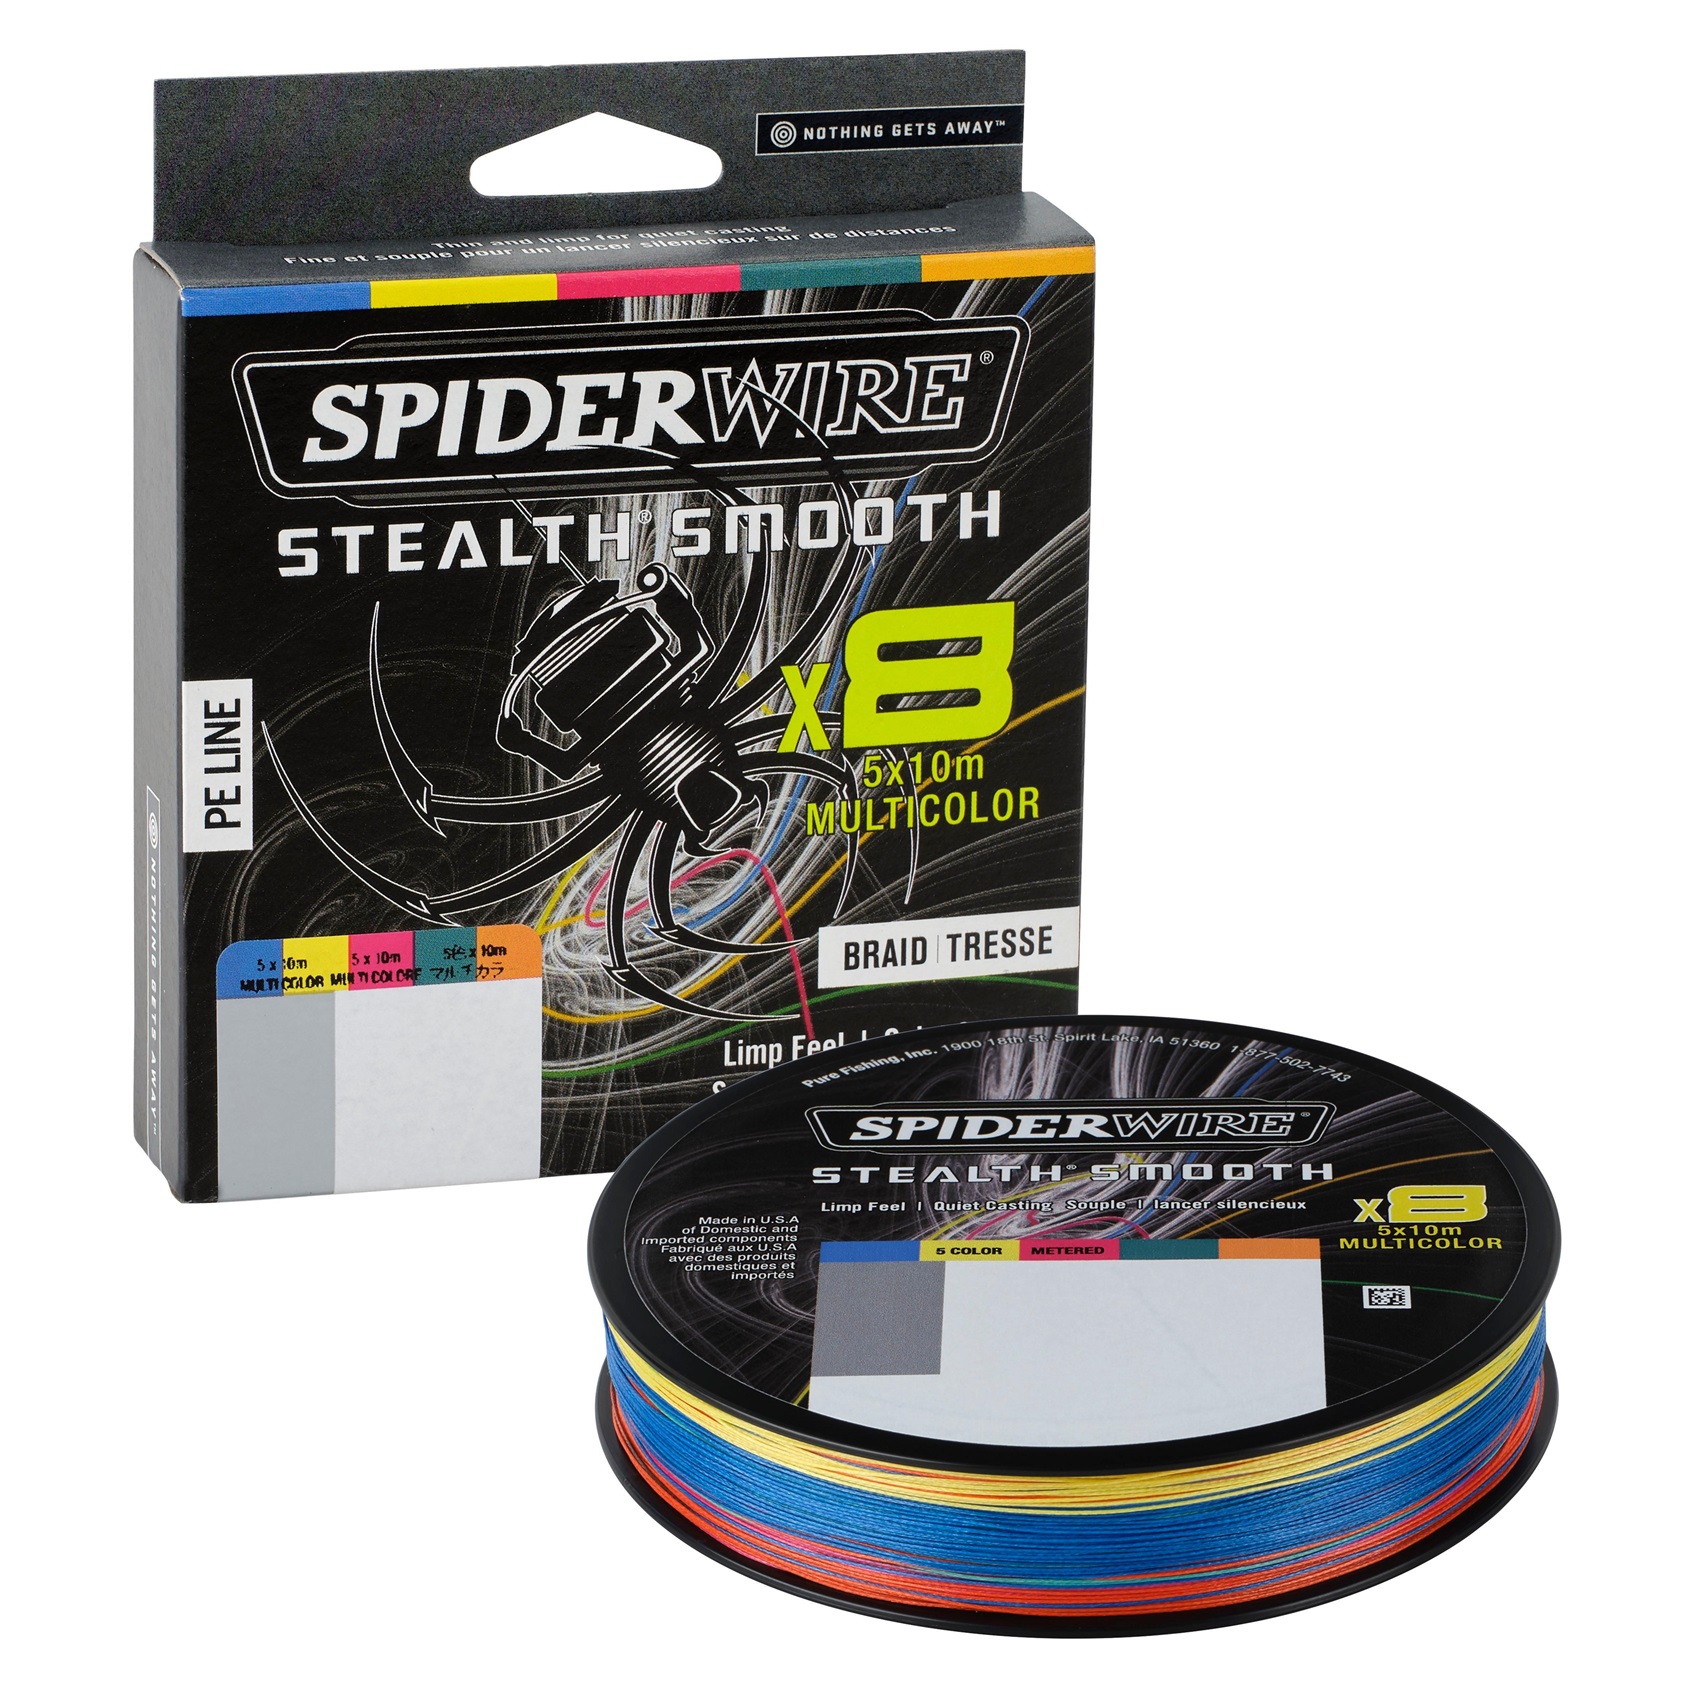 Spiderwire Stealth Smooth 8 Braid Multicolor Braided Line (300m)